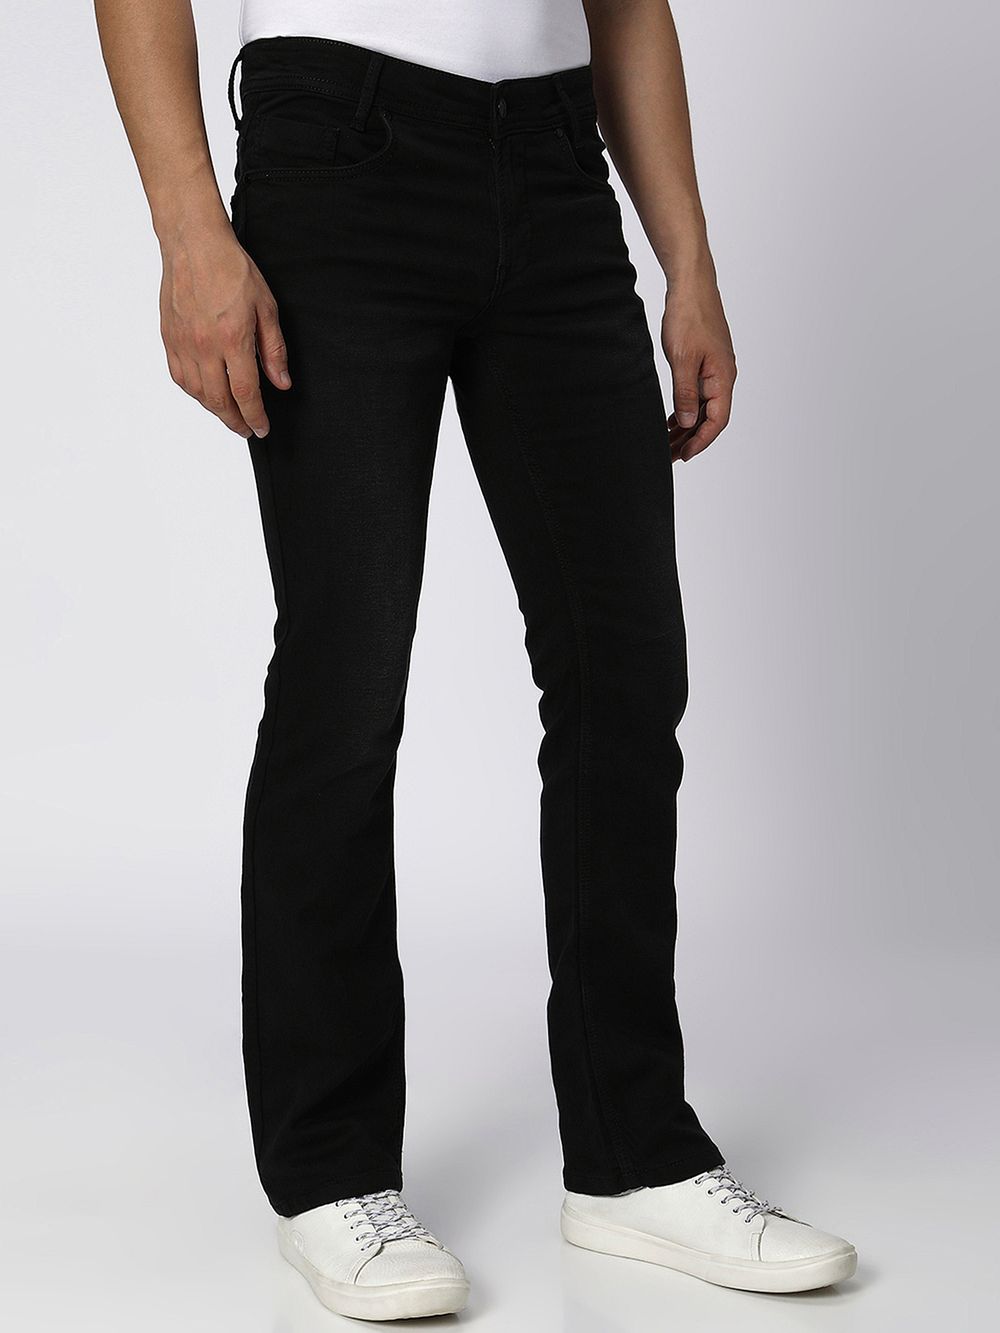 Black Bootcut Distressed Stretch Jeans